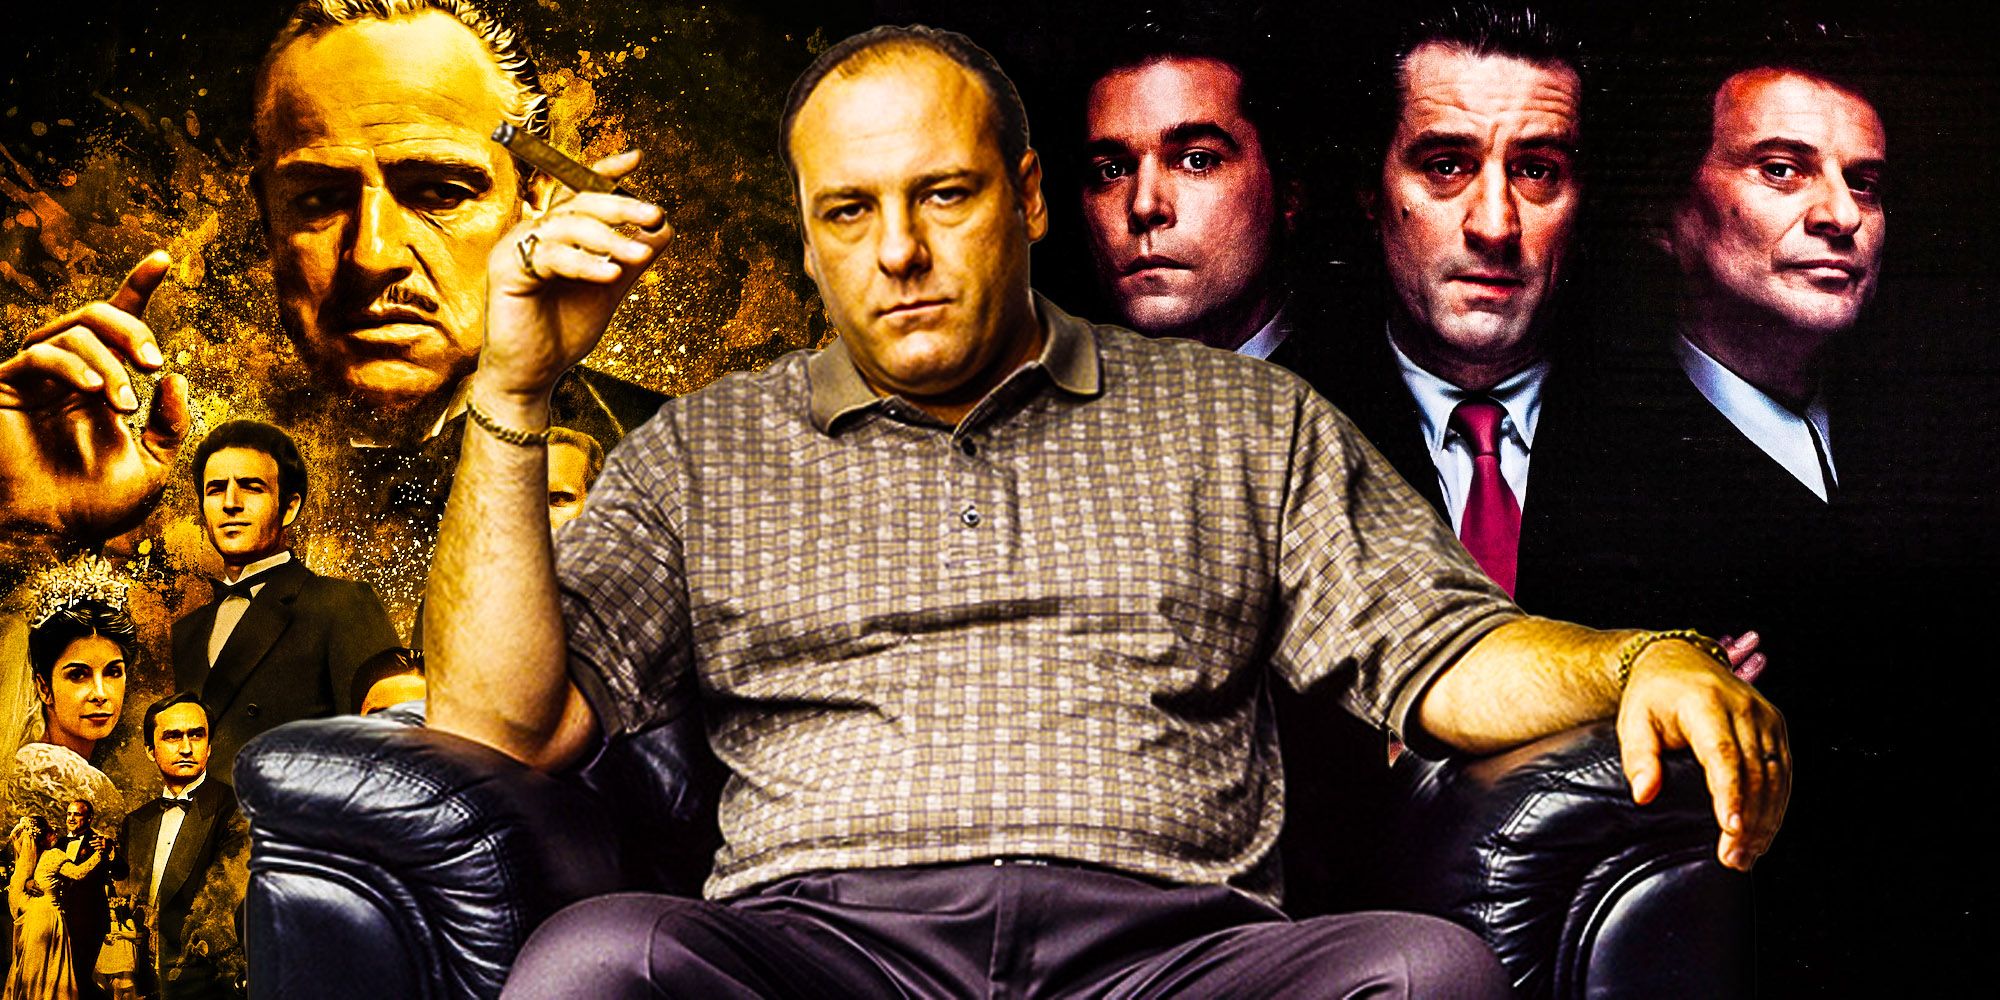 Tony Soprano owes more to the godfather than goodfellas